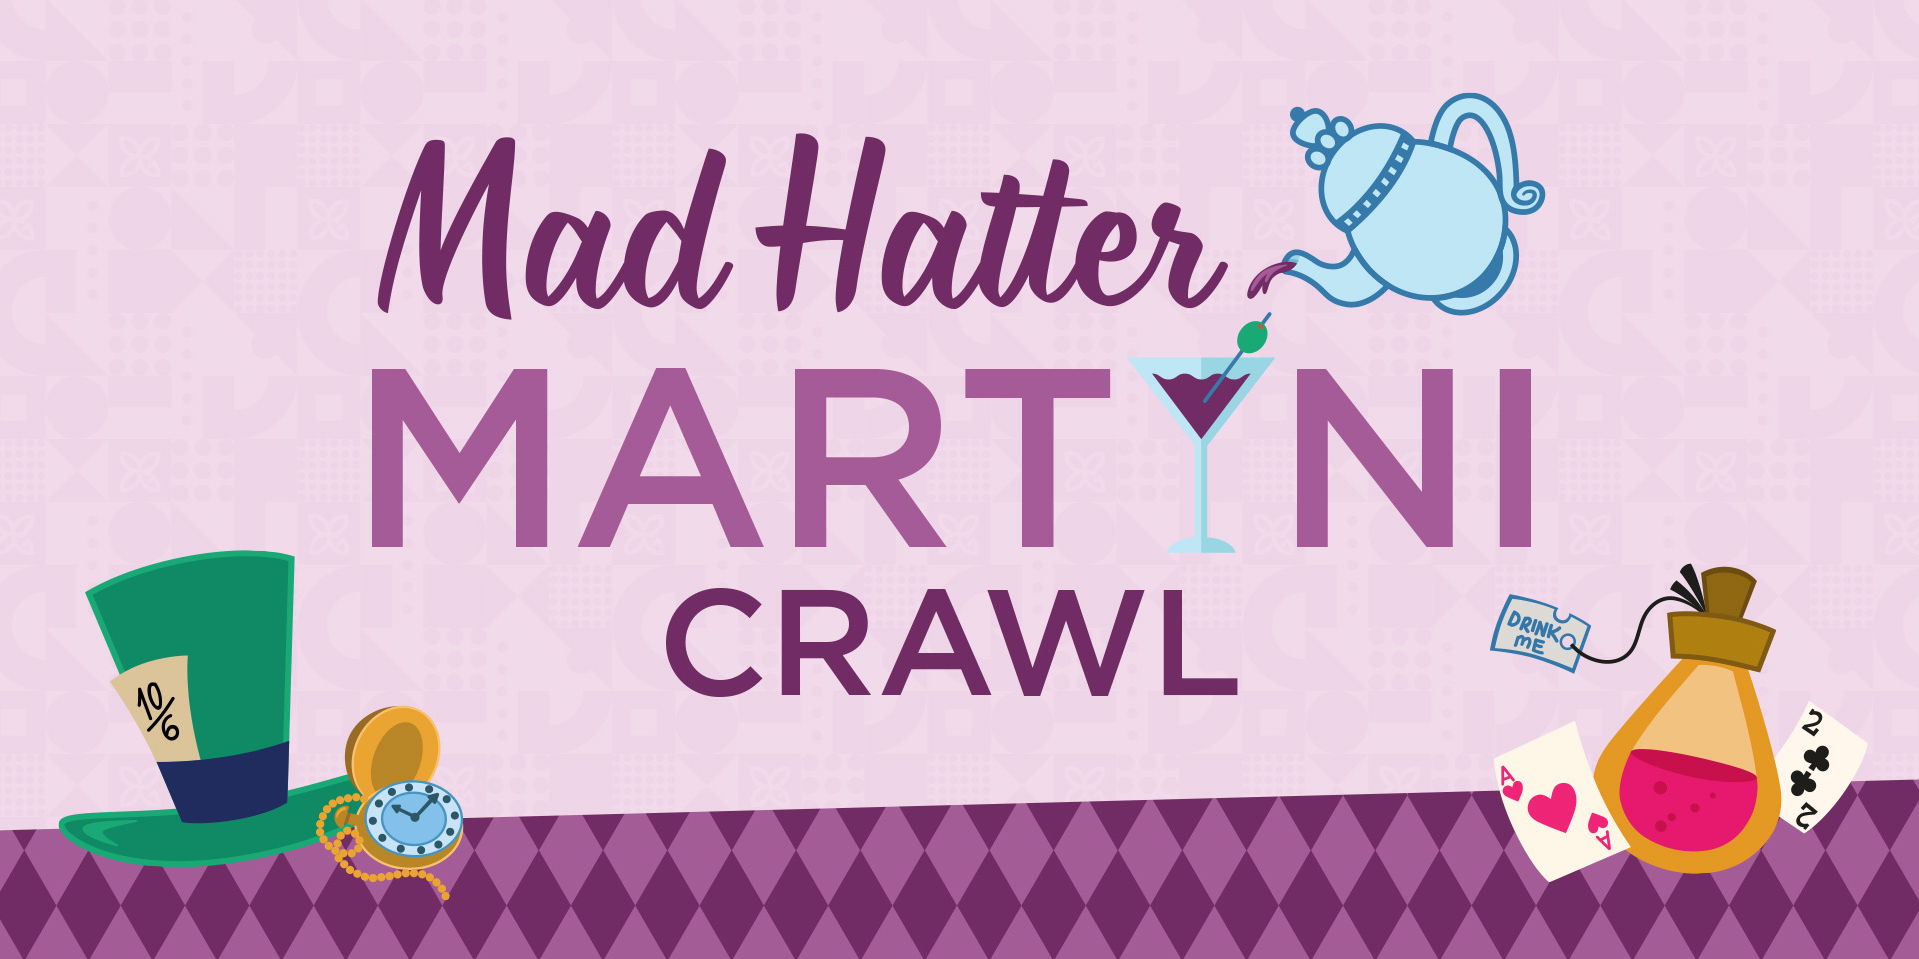 Mad Hatter Martini Crawl promotional image